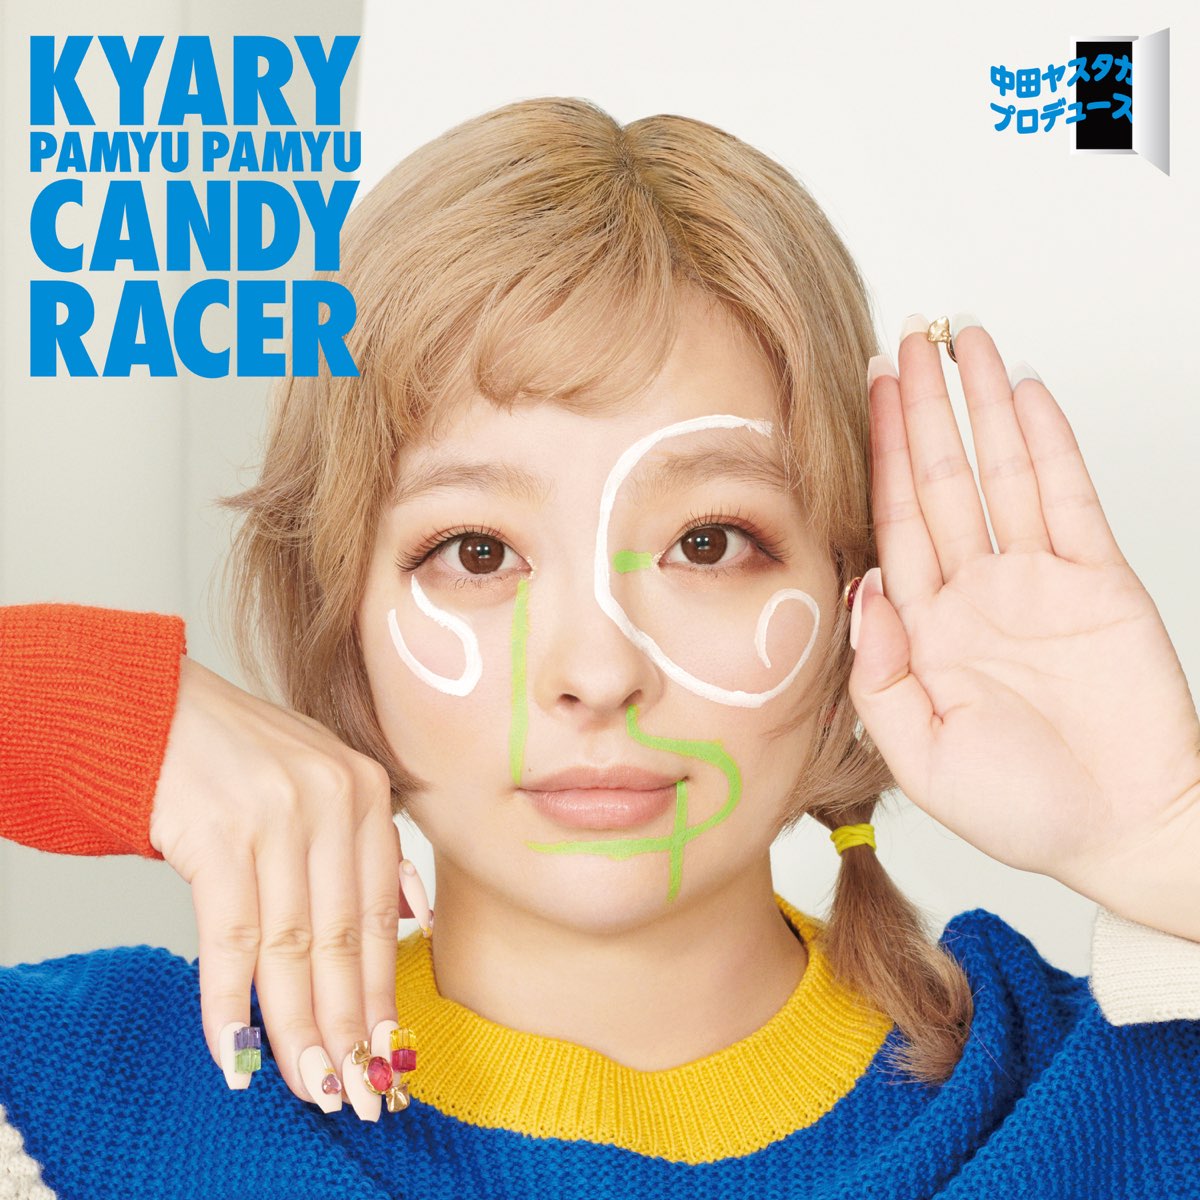 Kyary Pamyu Pamyu — Candy Racer cover artwork